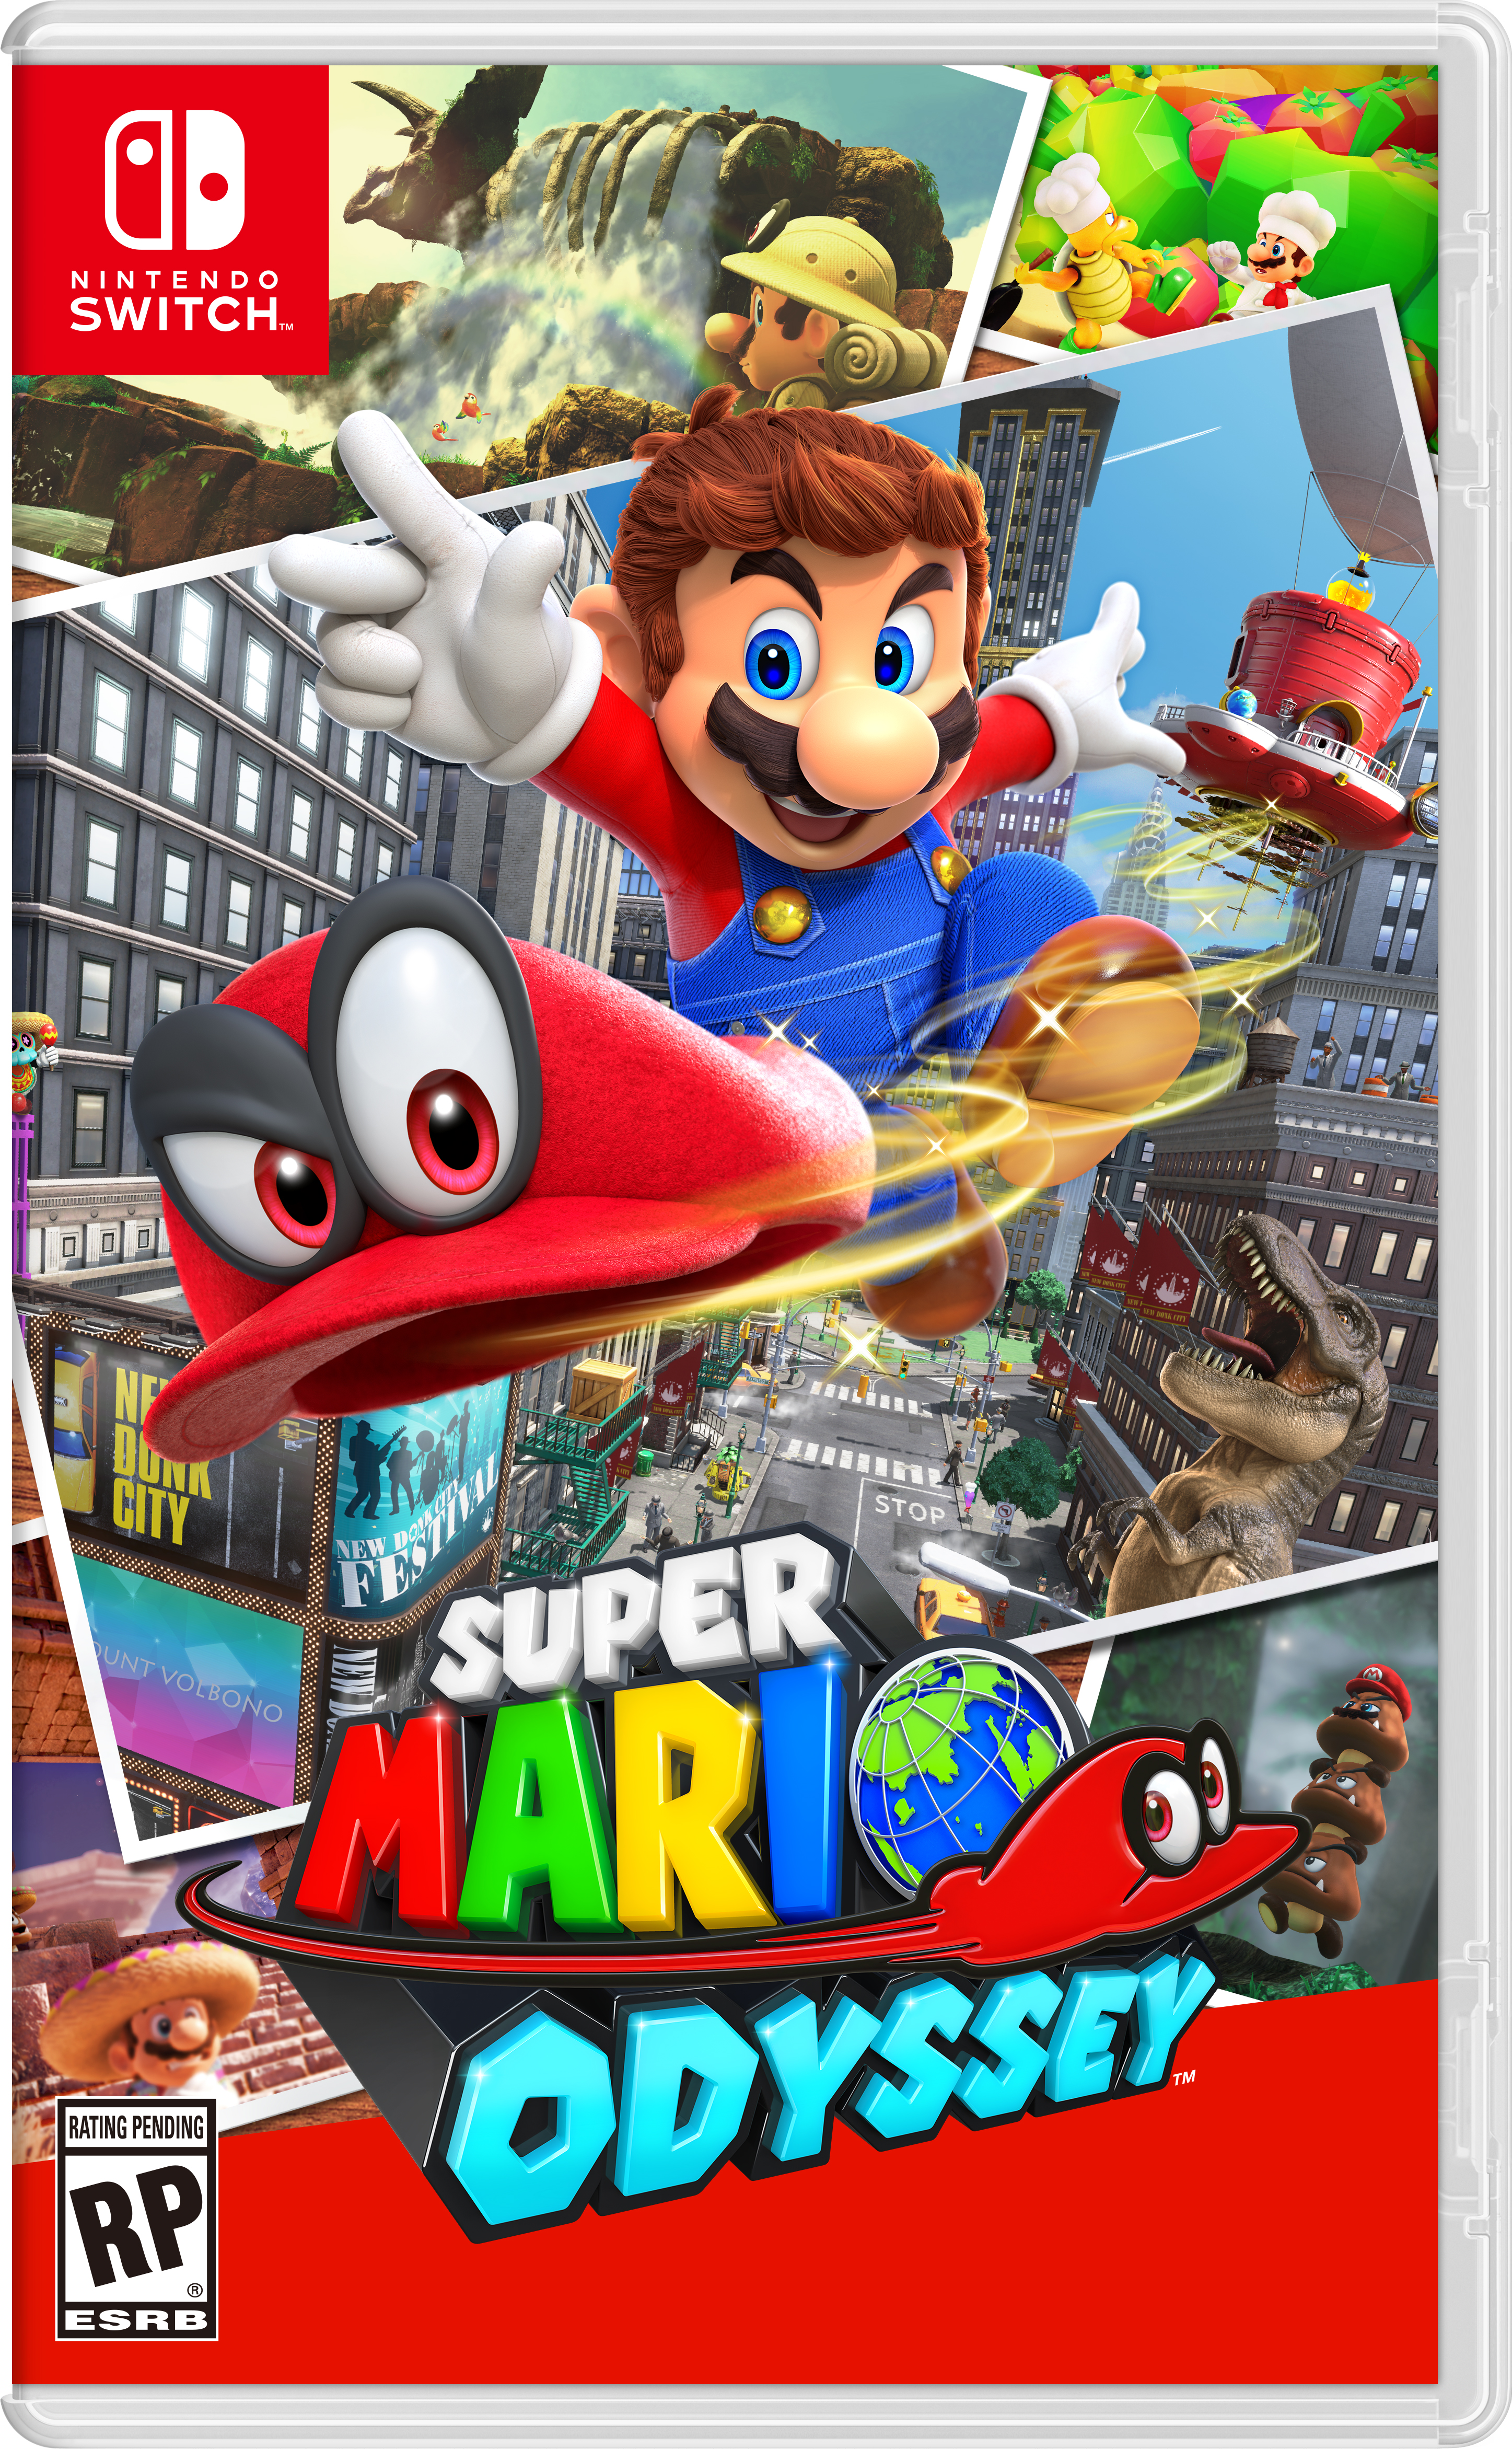 Super_Mario_Odyssey_-_Box_NA.jpg